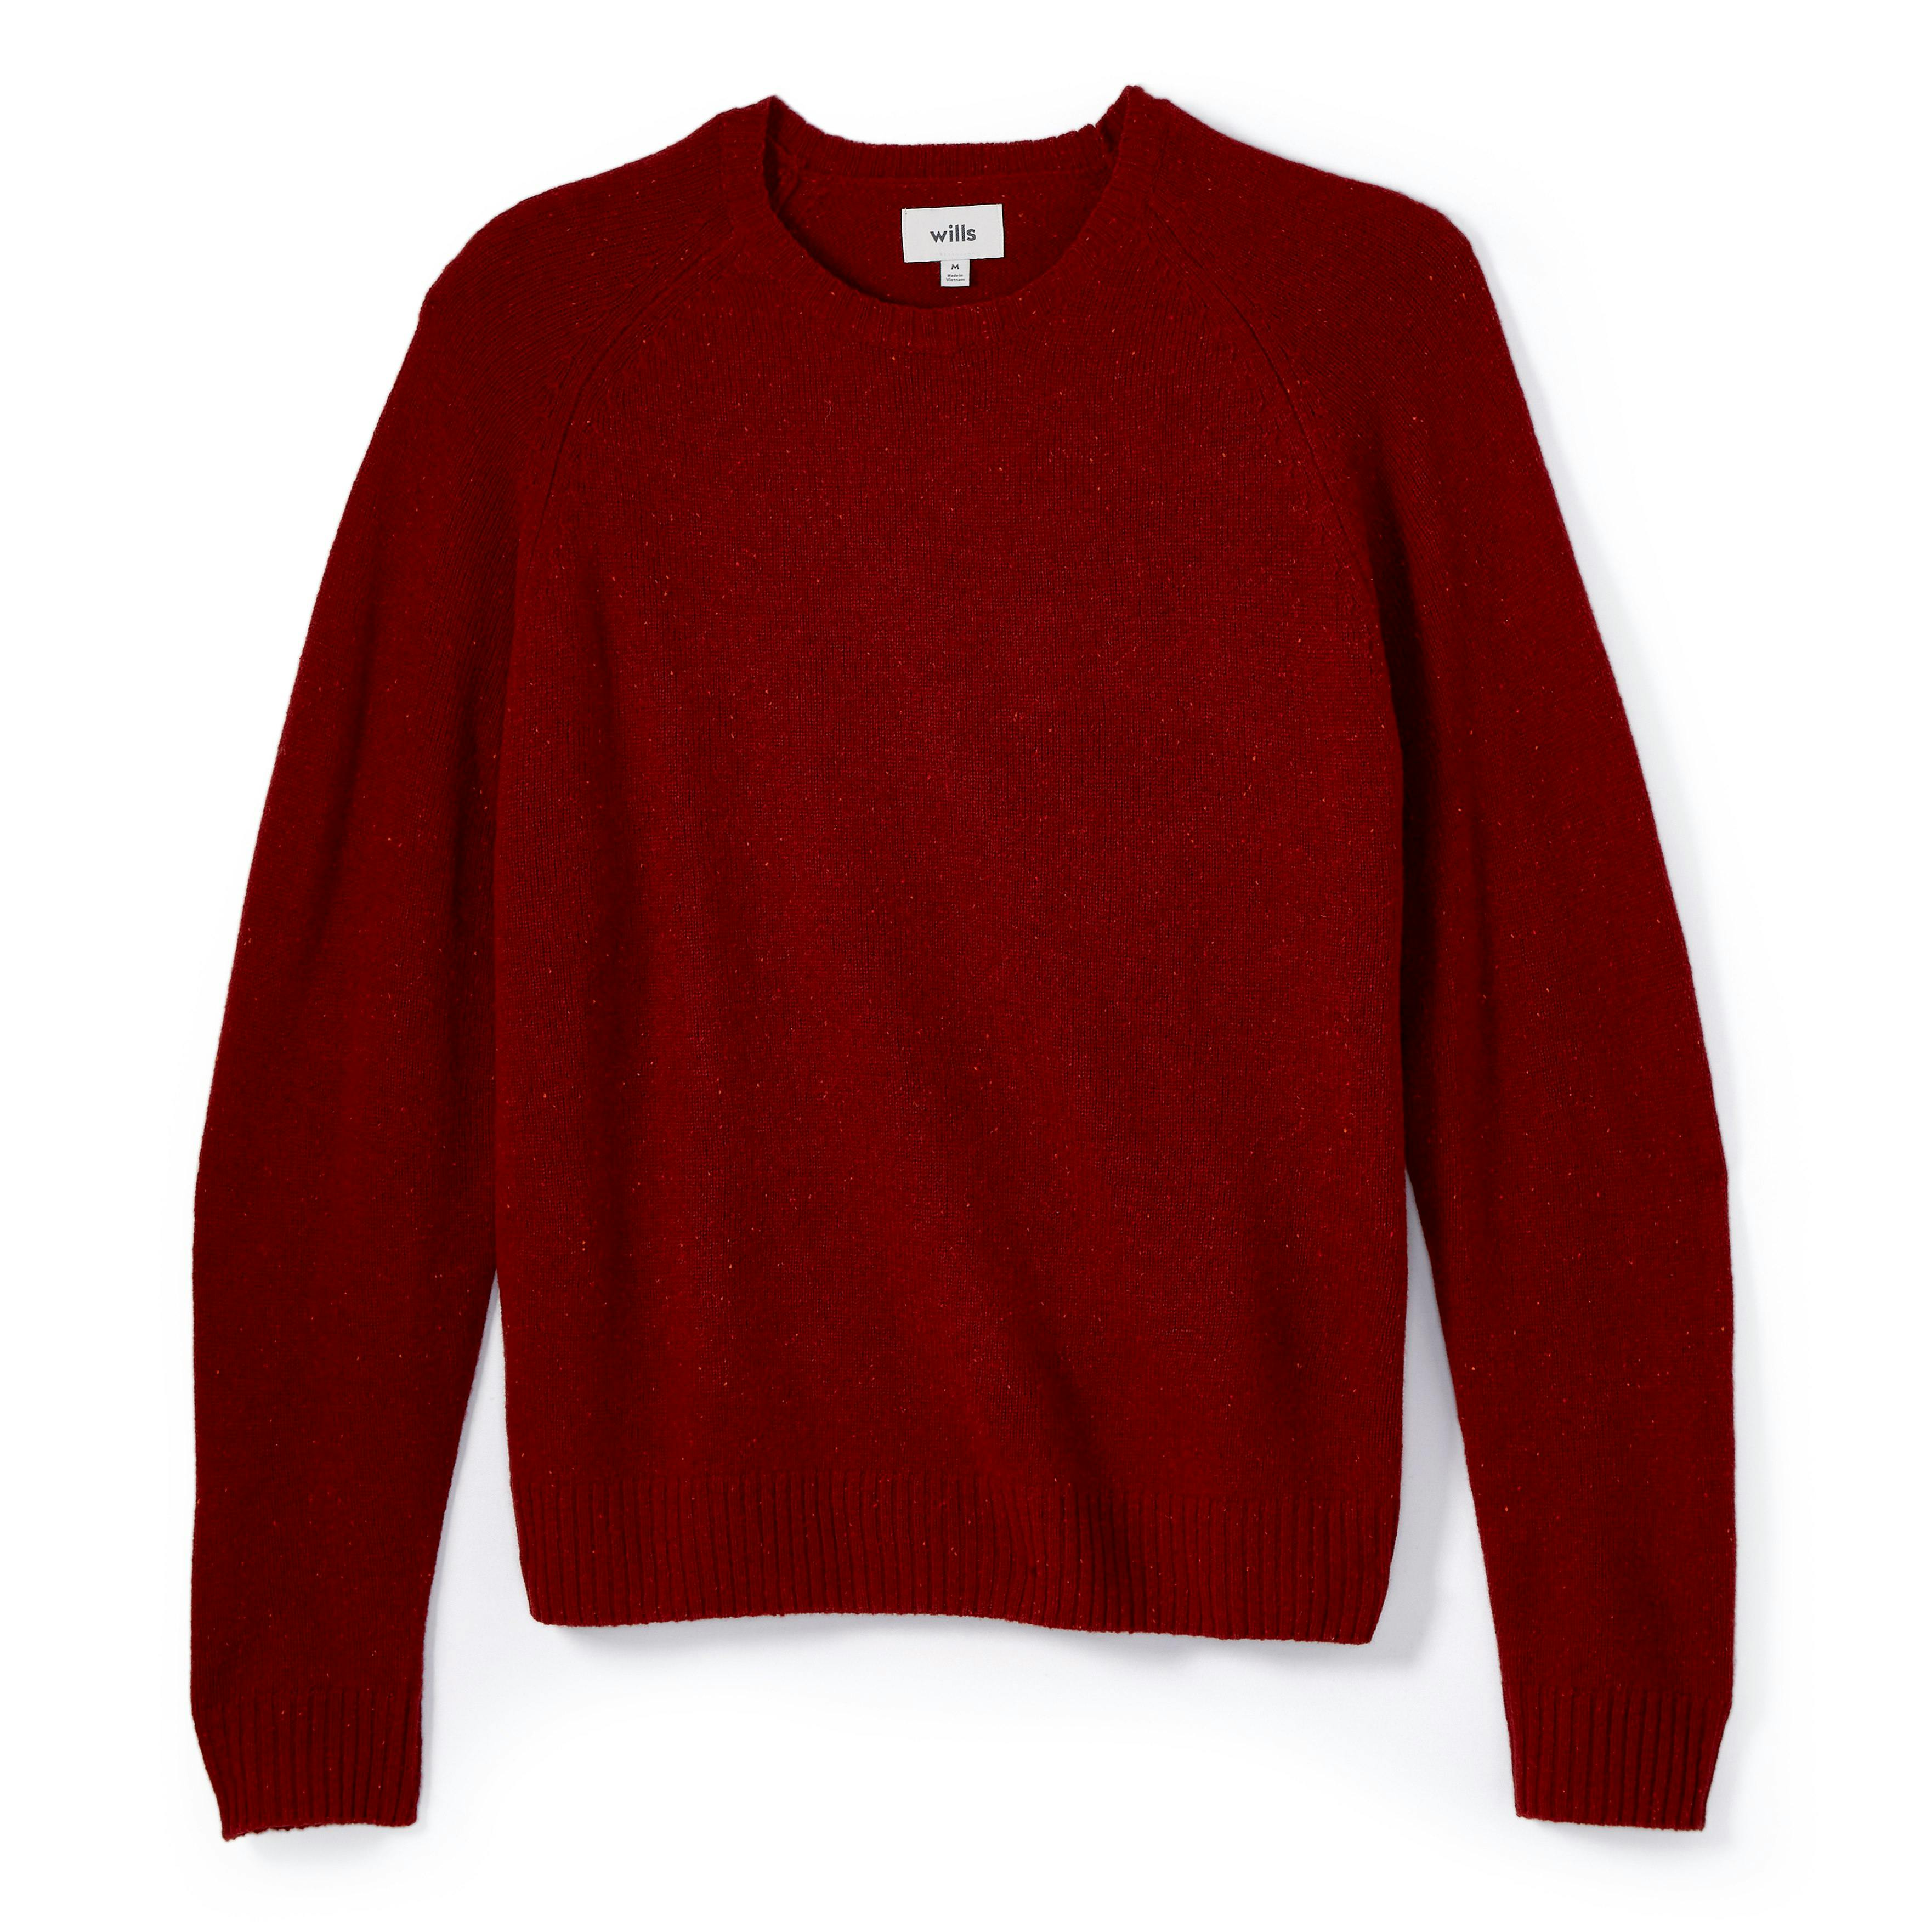 Speckled Merino Wool Crewneck Sweater